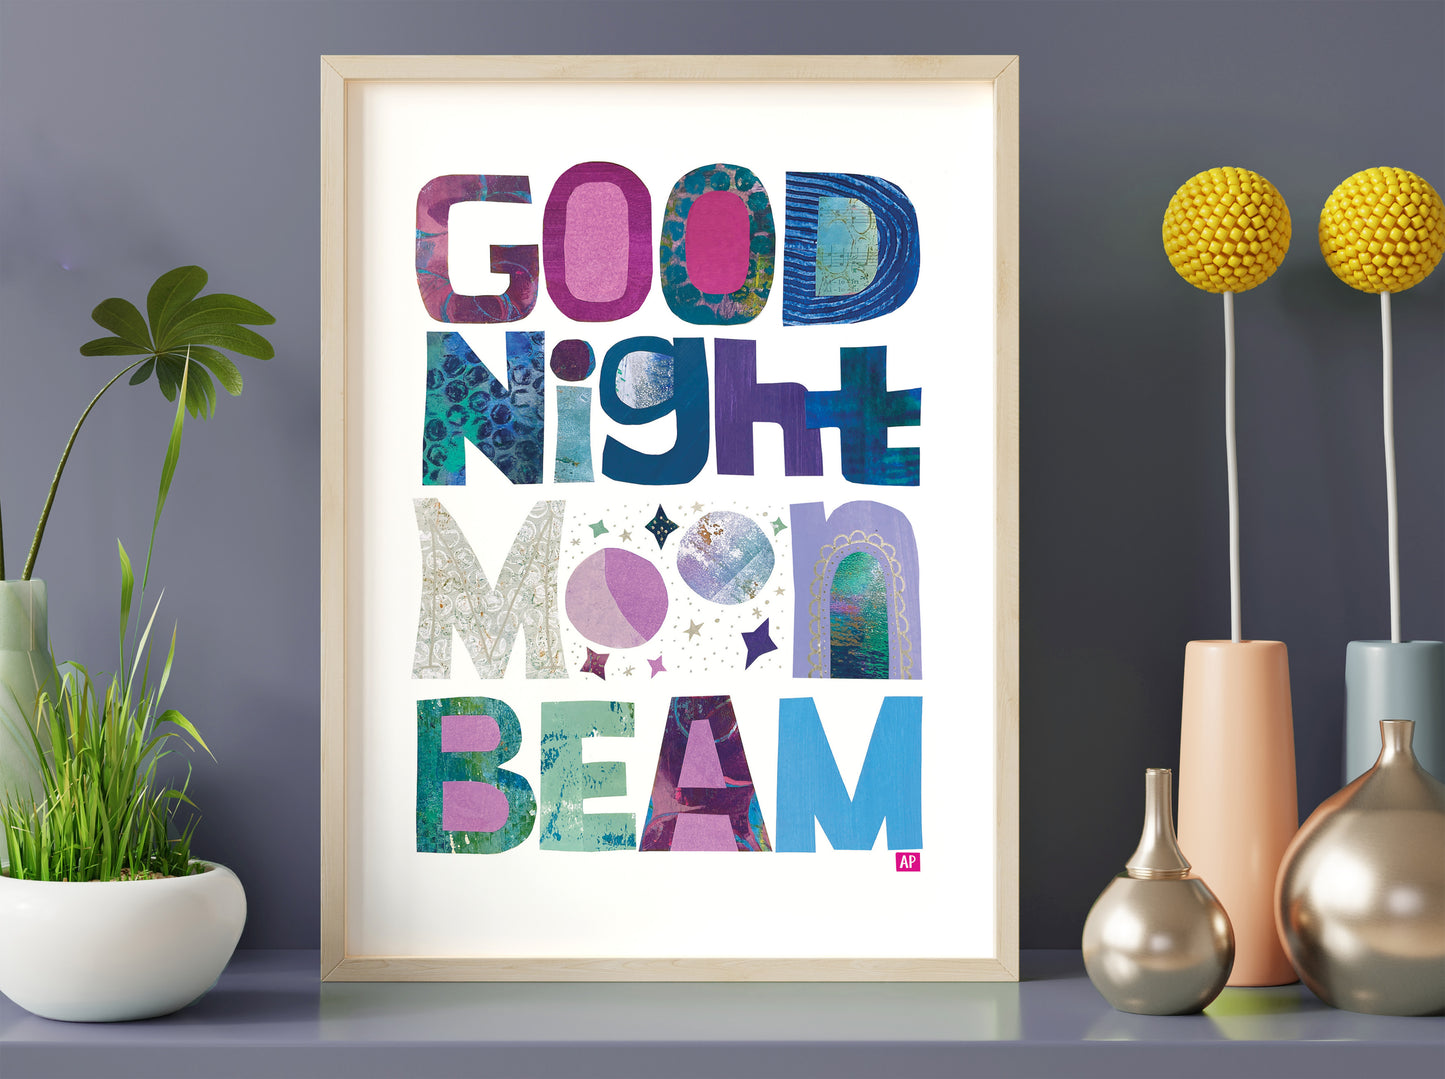 Good Night Moon Beam